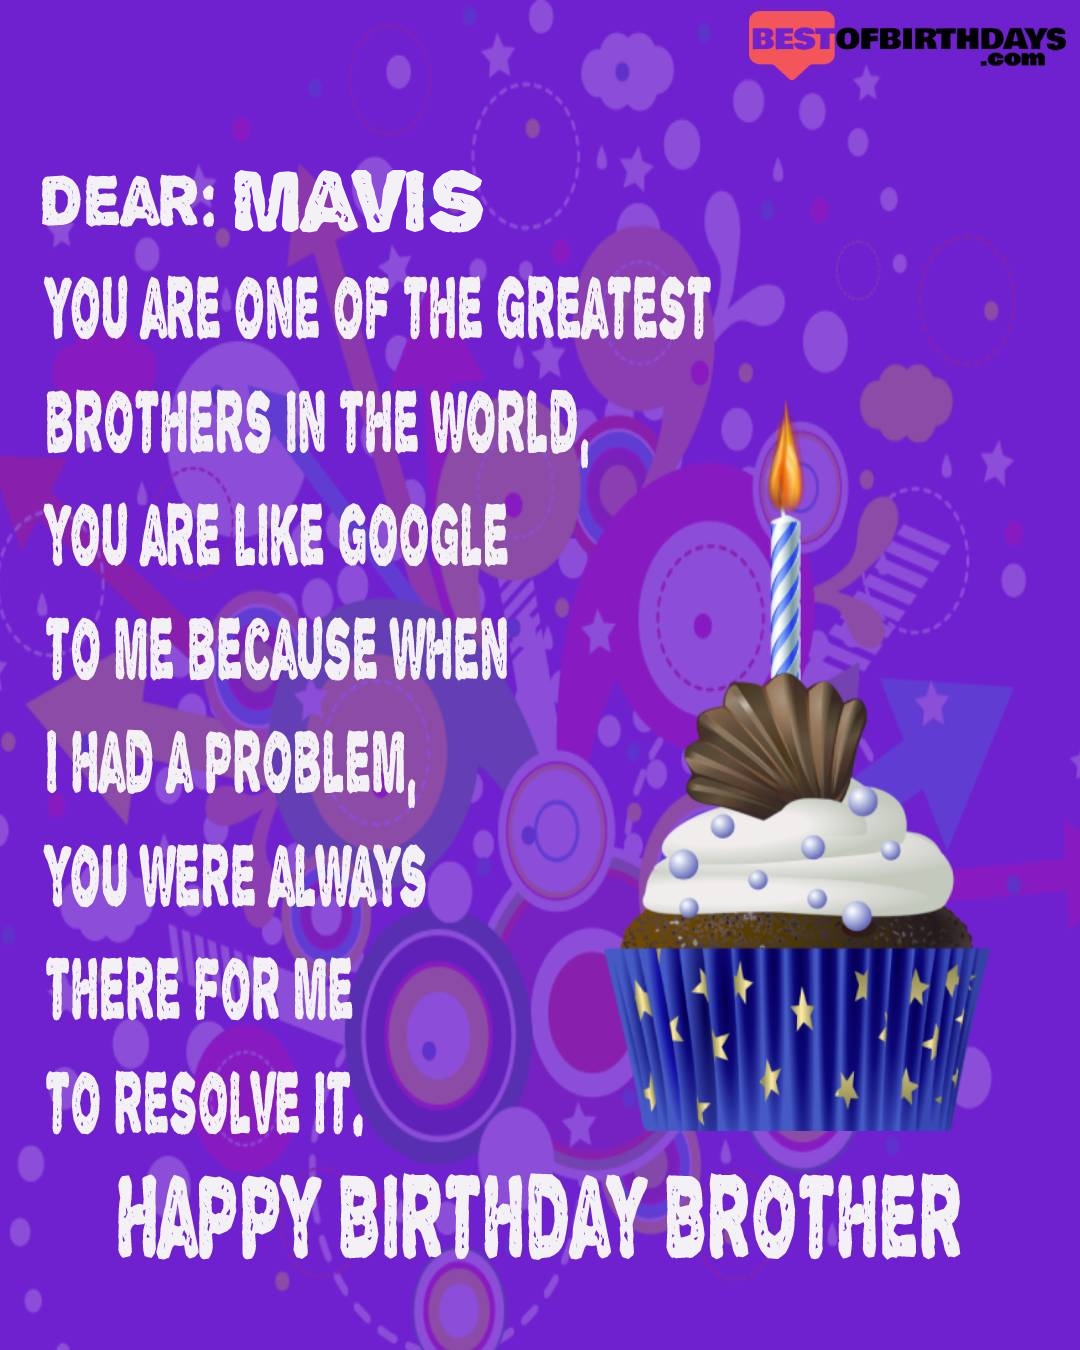 Happy birthday mavis bhai brother bro